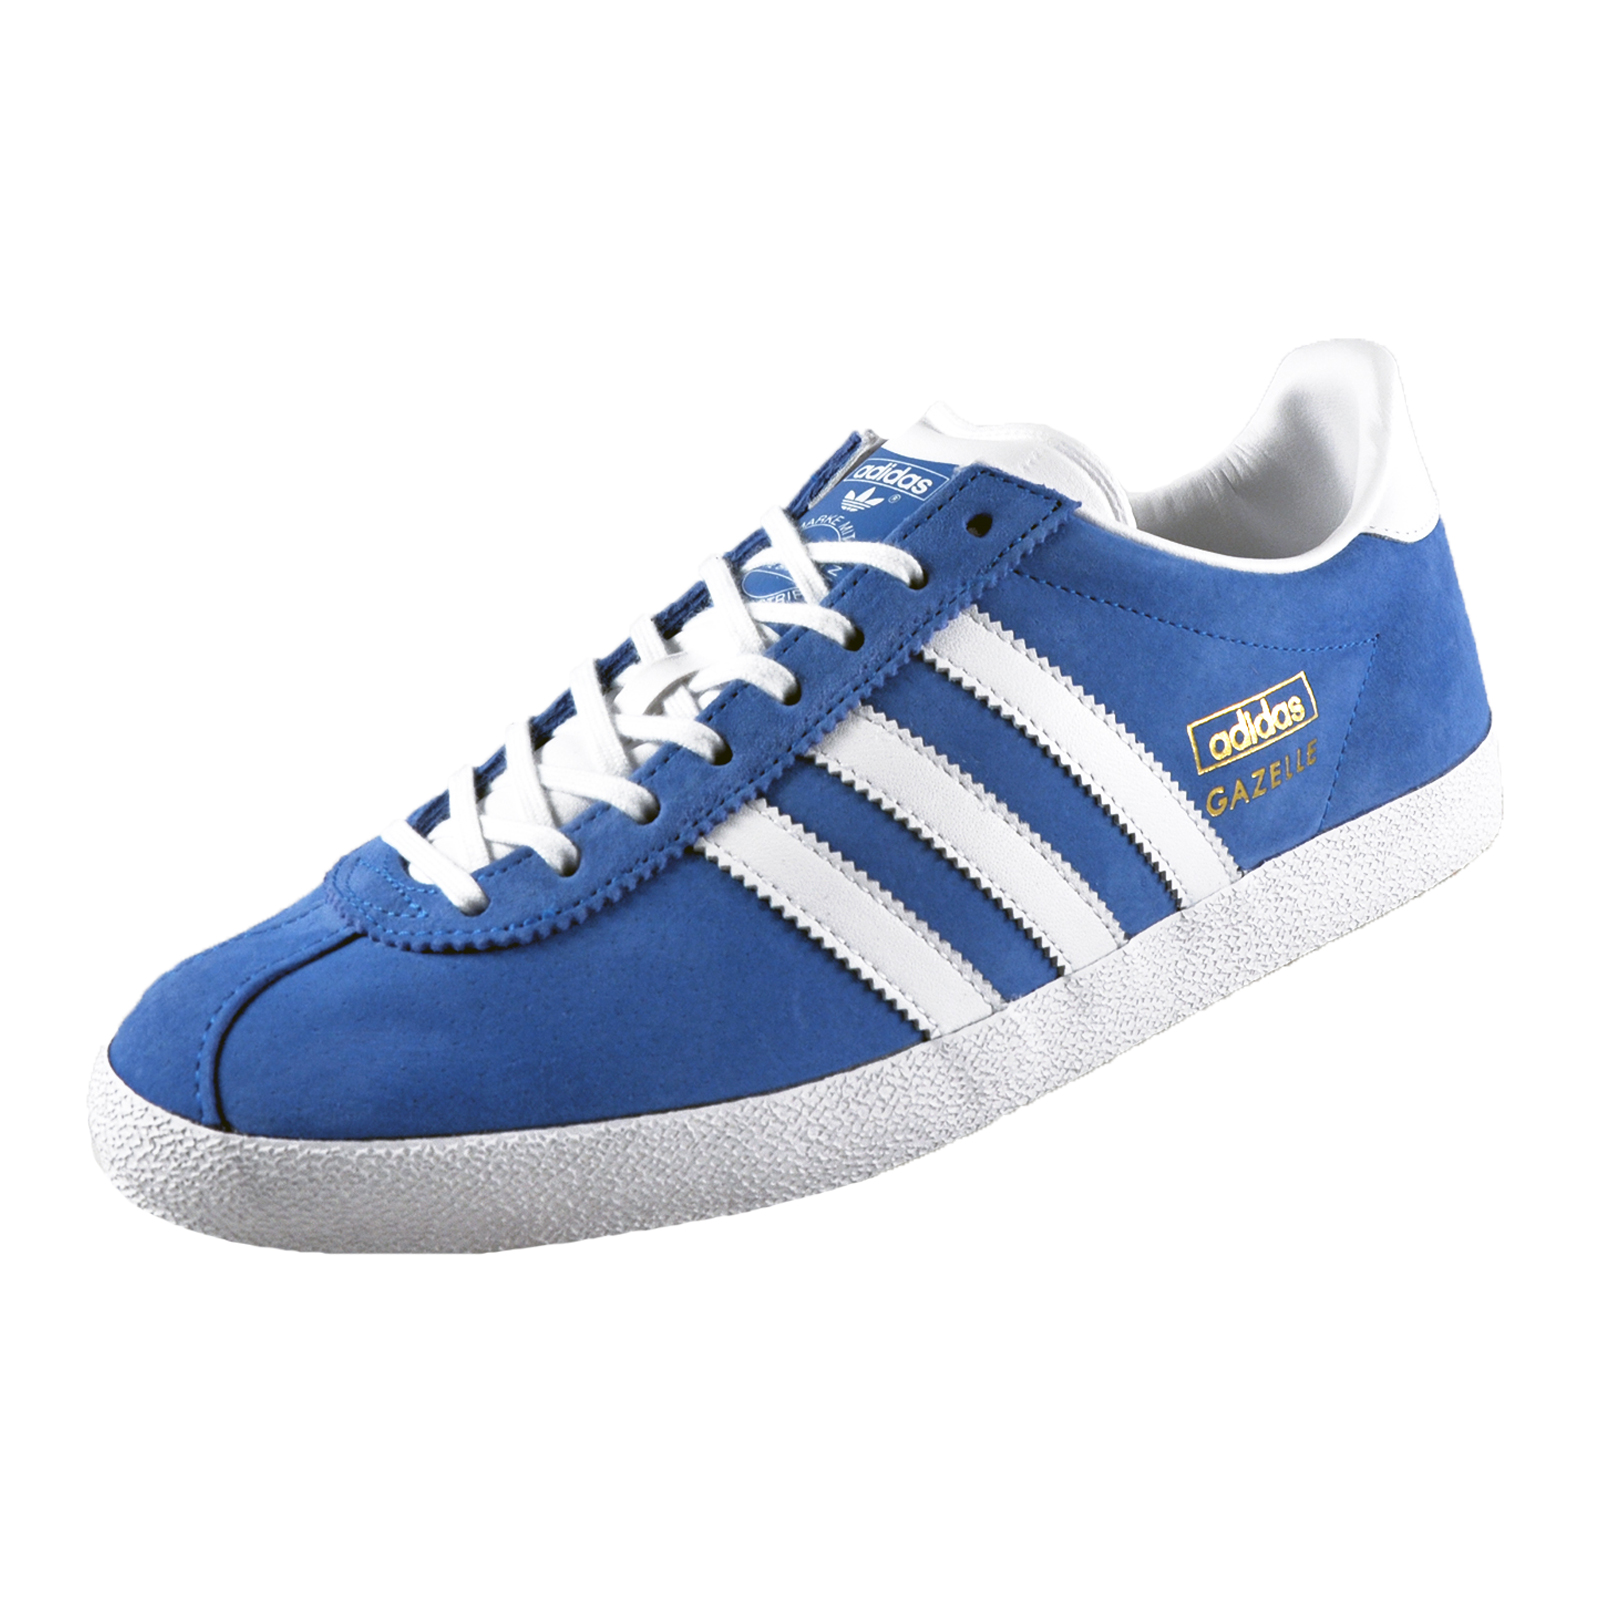 Adidas Originals Mens Gazelle OG Classic Retro Trainers Blue *AUTHENTIC